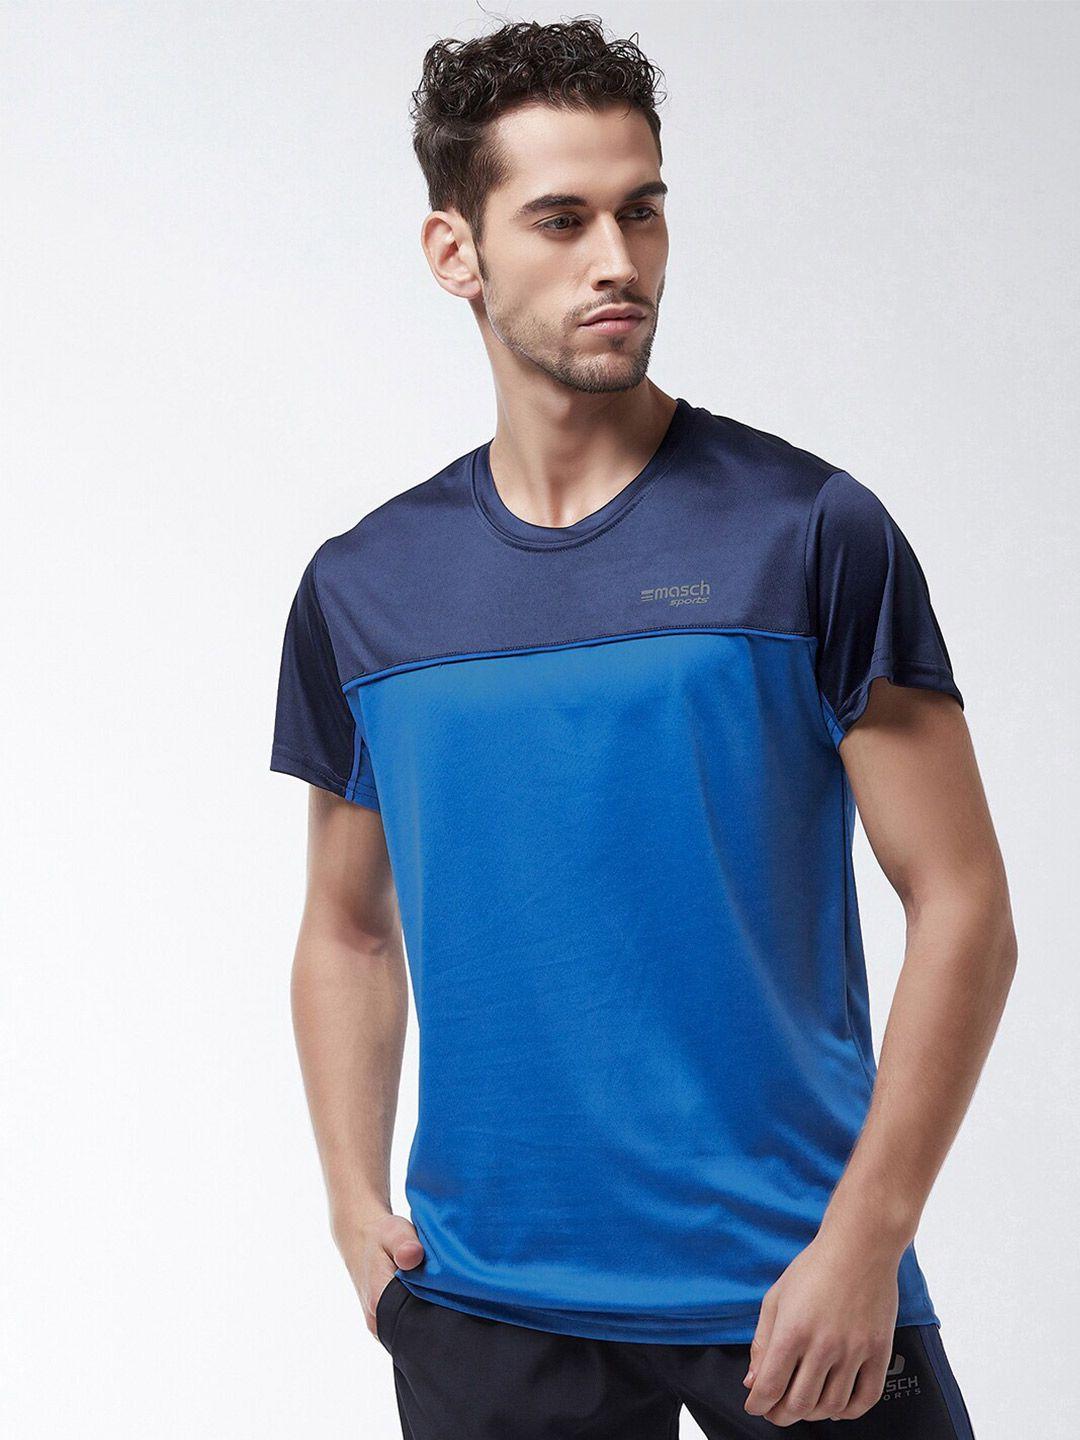 masch sports men blue colourblocked training or gym dri-fit t-shirt